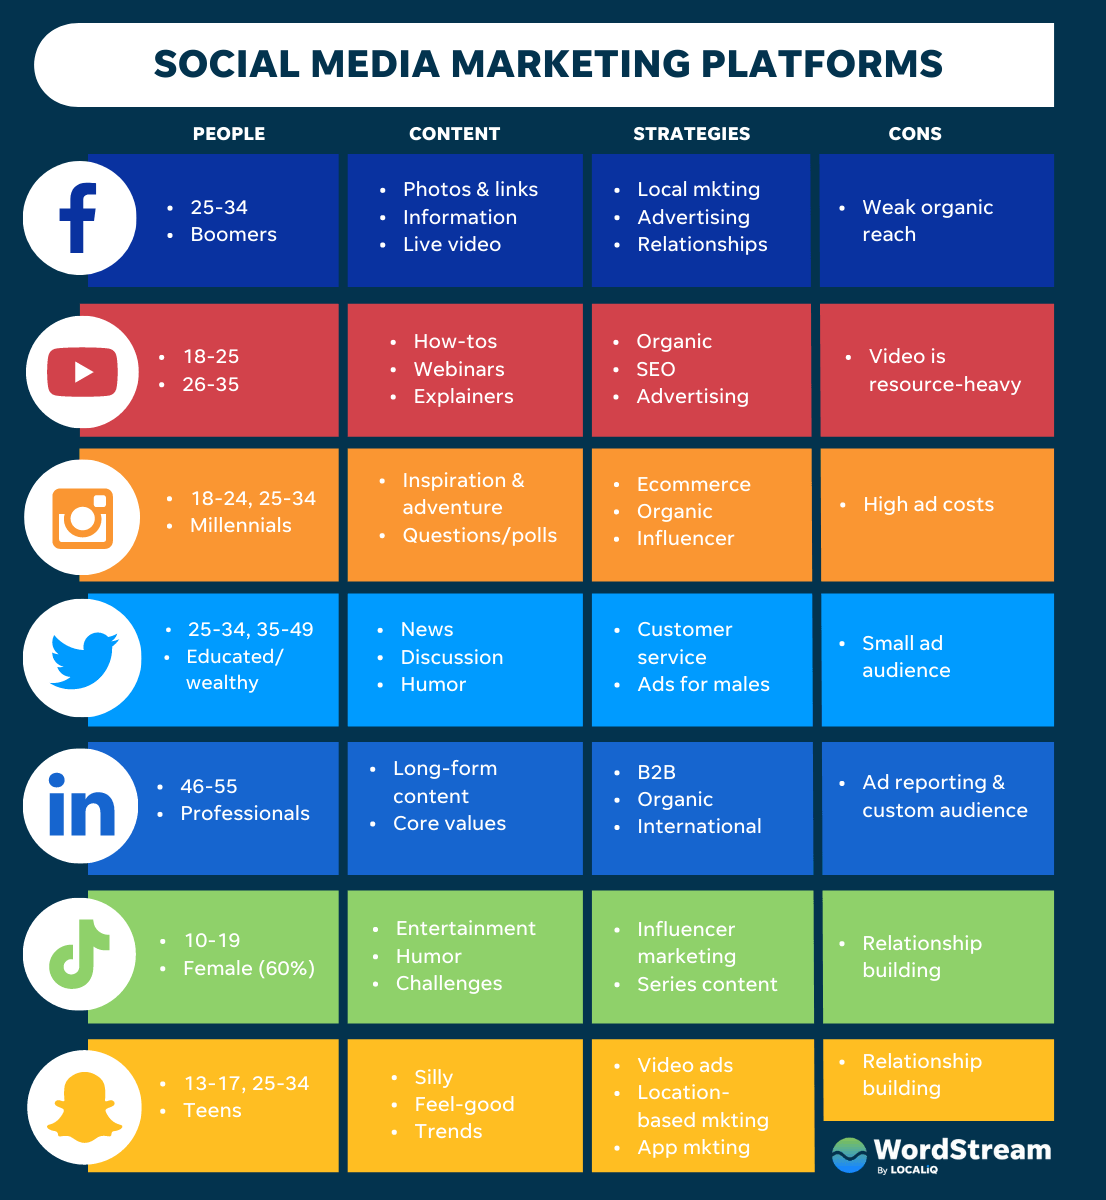 Social Media Marketing Platforms via WordStream by LOCALiQ